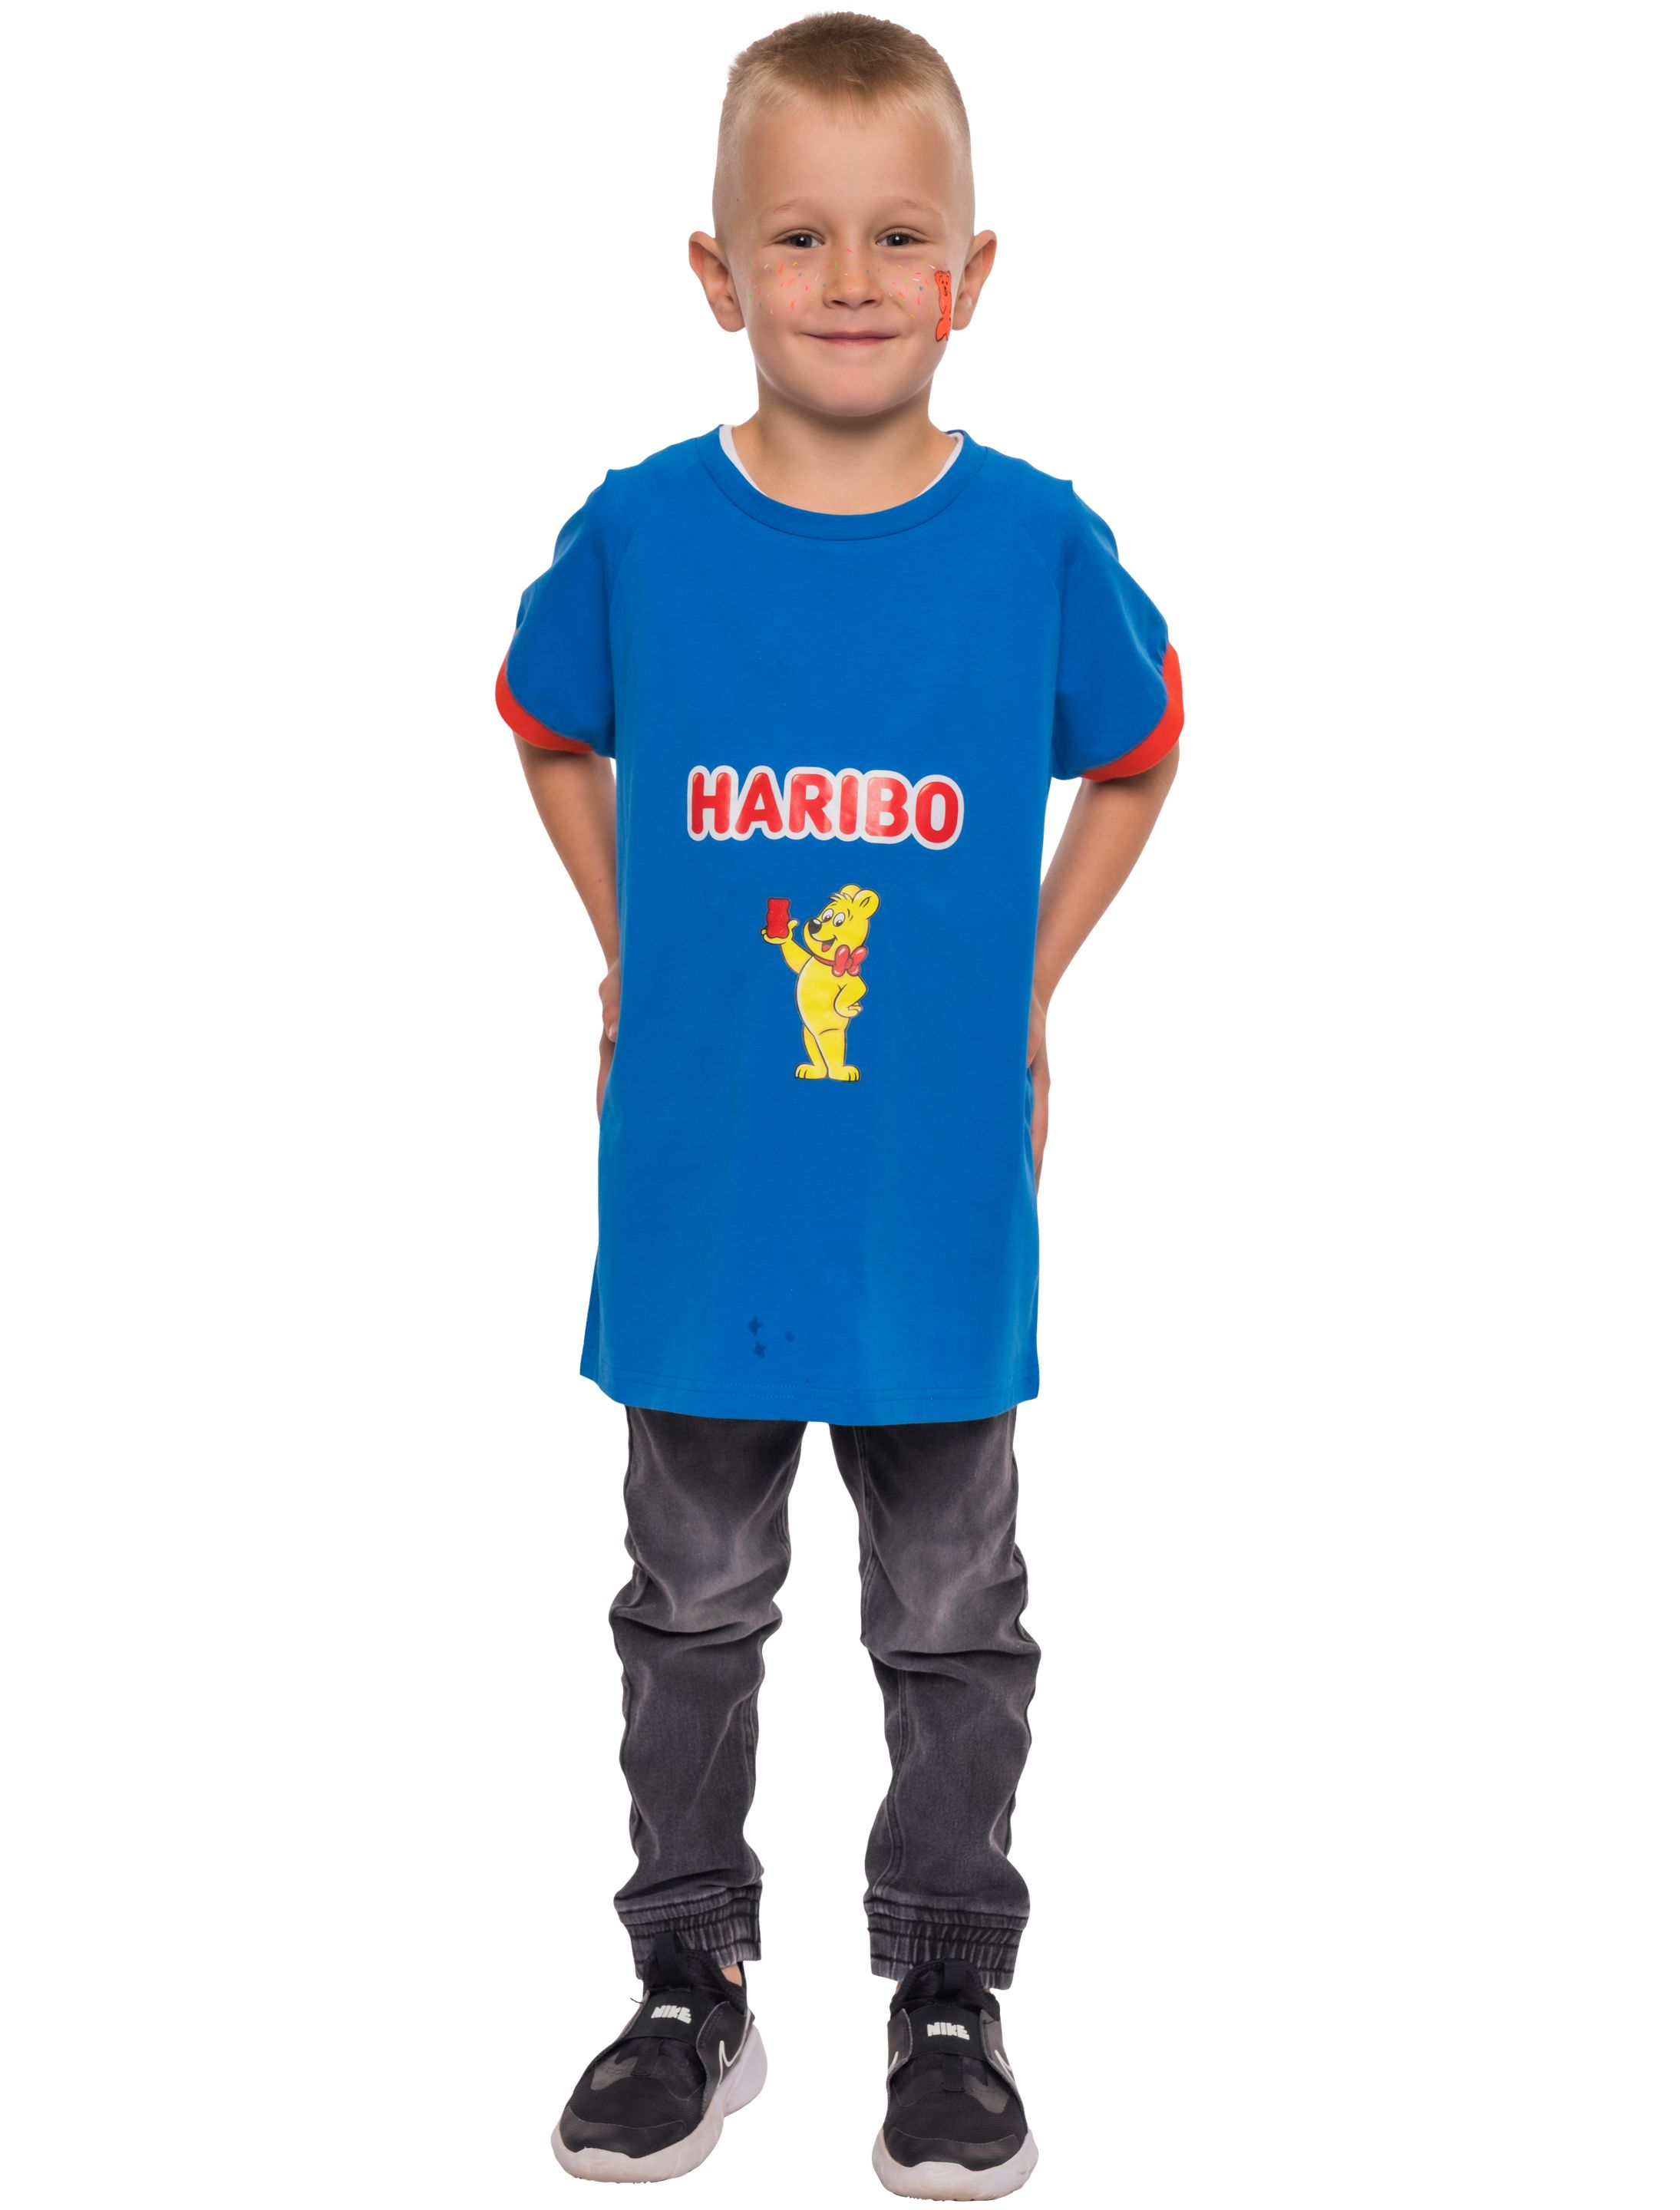 T-Shirt HARIBO Goldbären blau 128